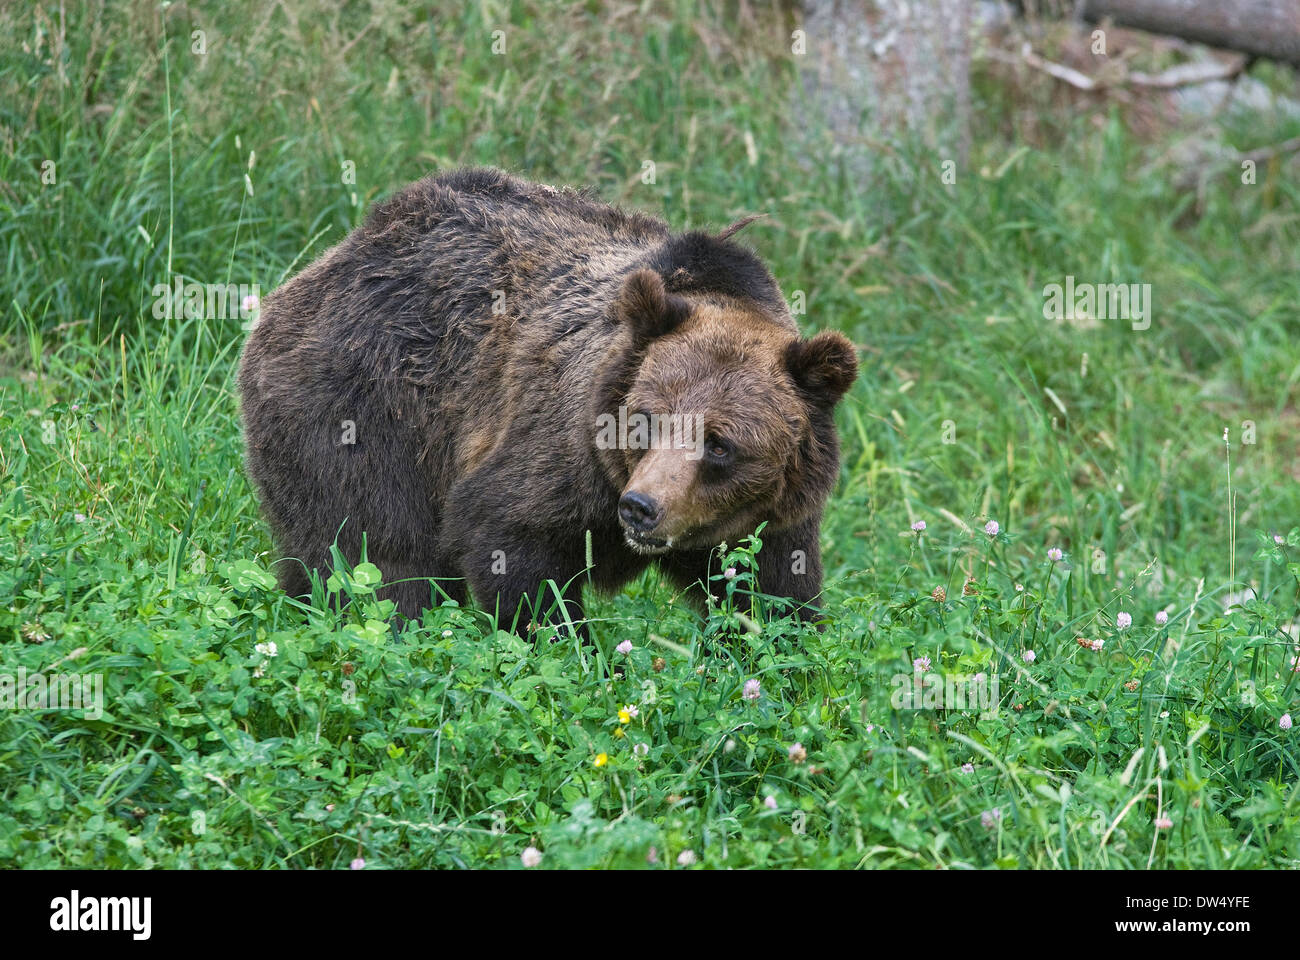 Brown bear (Ursus arctos) in wildlife area,  Osservatorio Eco-Faunistico Alpino, Aprica, Lombardy, Italy Stock Photo